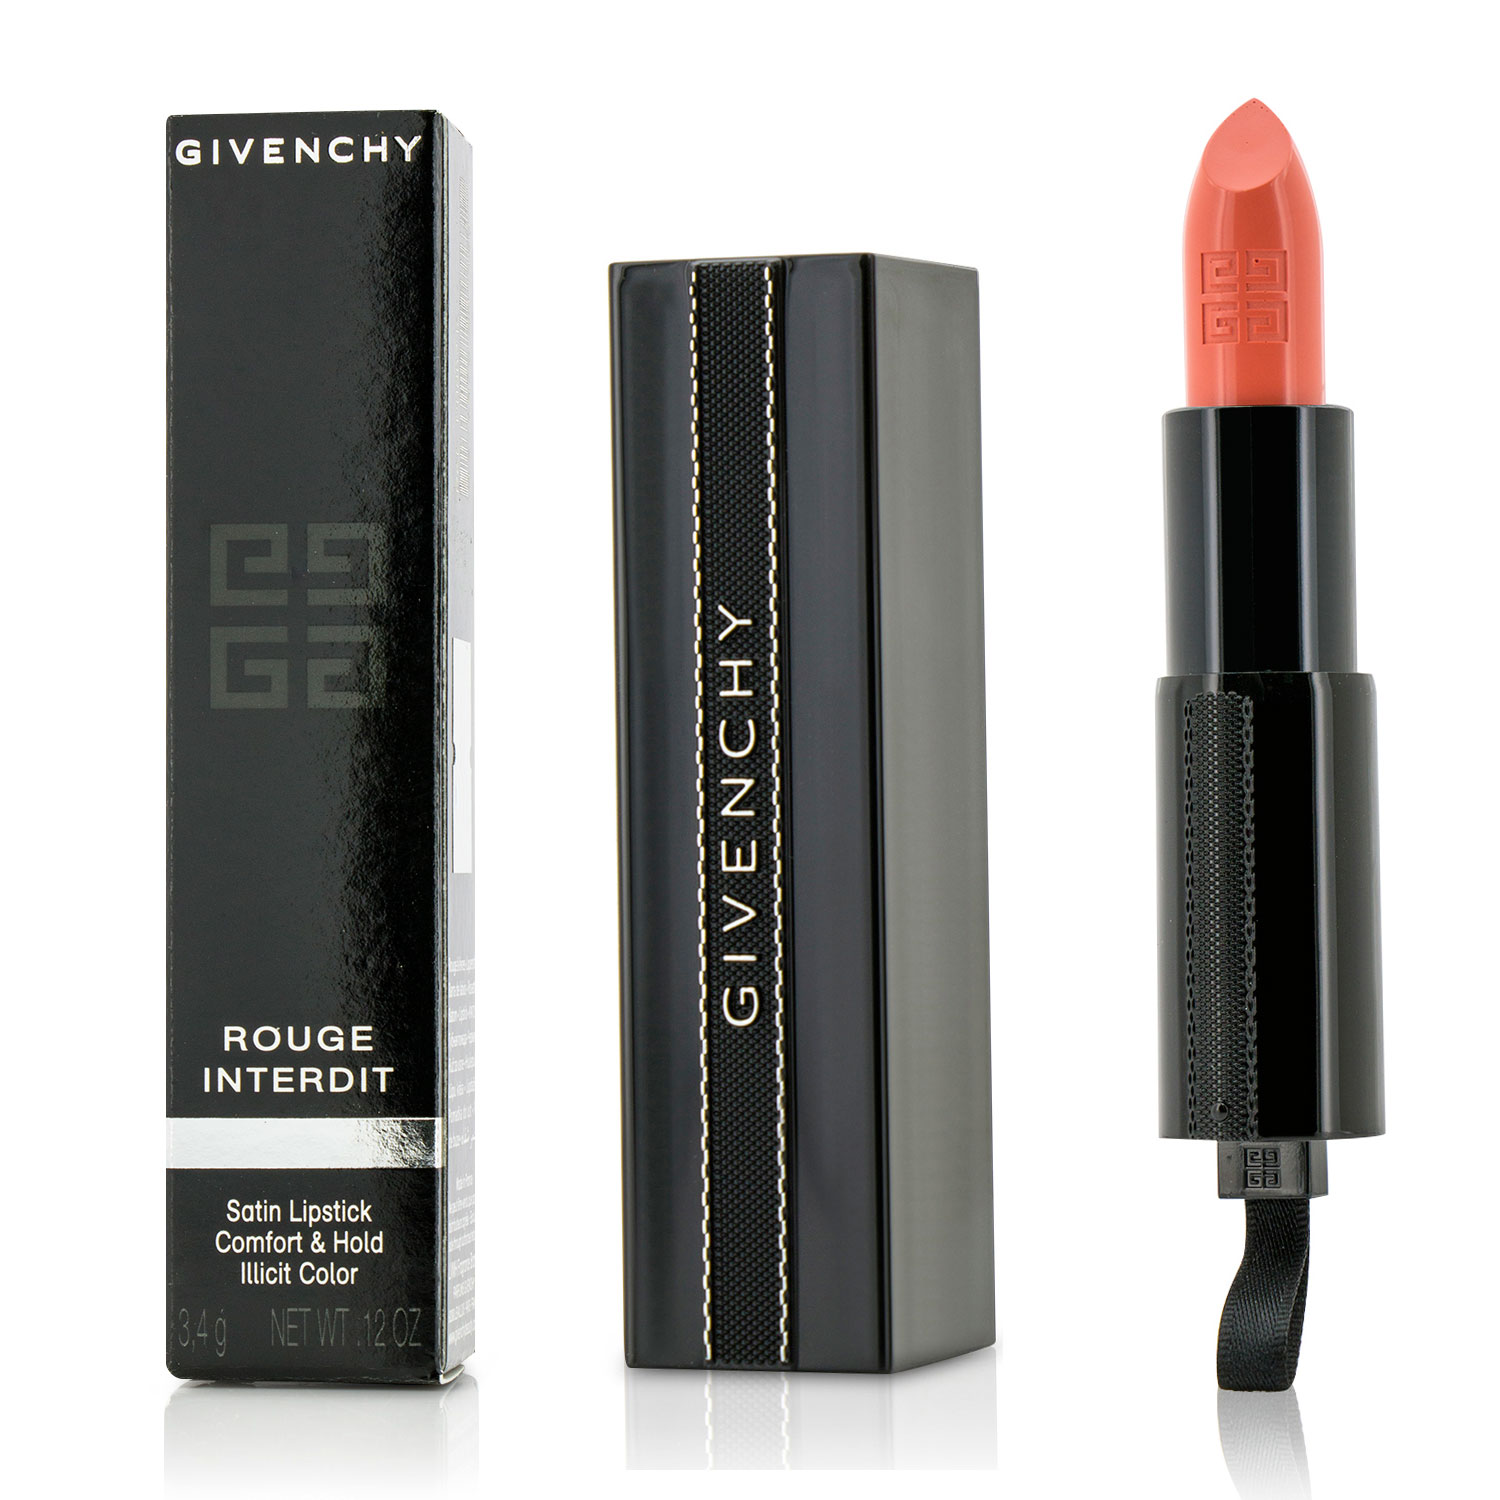 Rouge Interdit Satin Lipstick - # 17 Flash Coral Givenchy Image